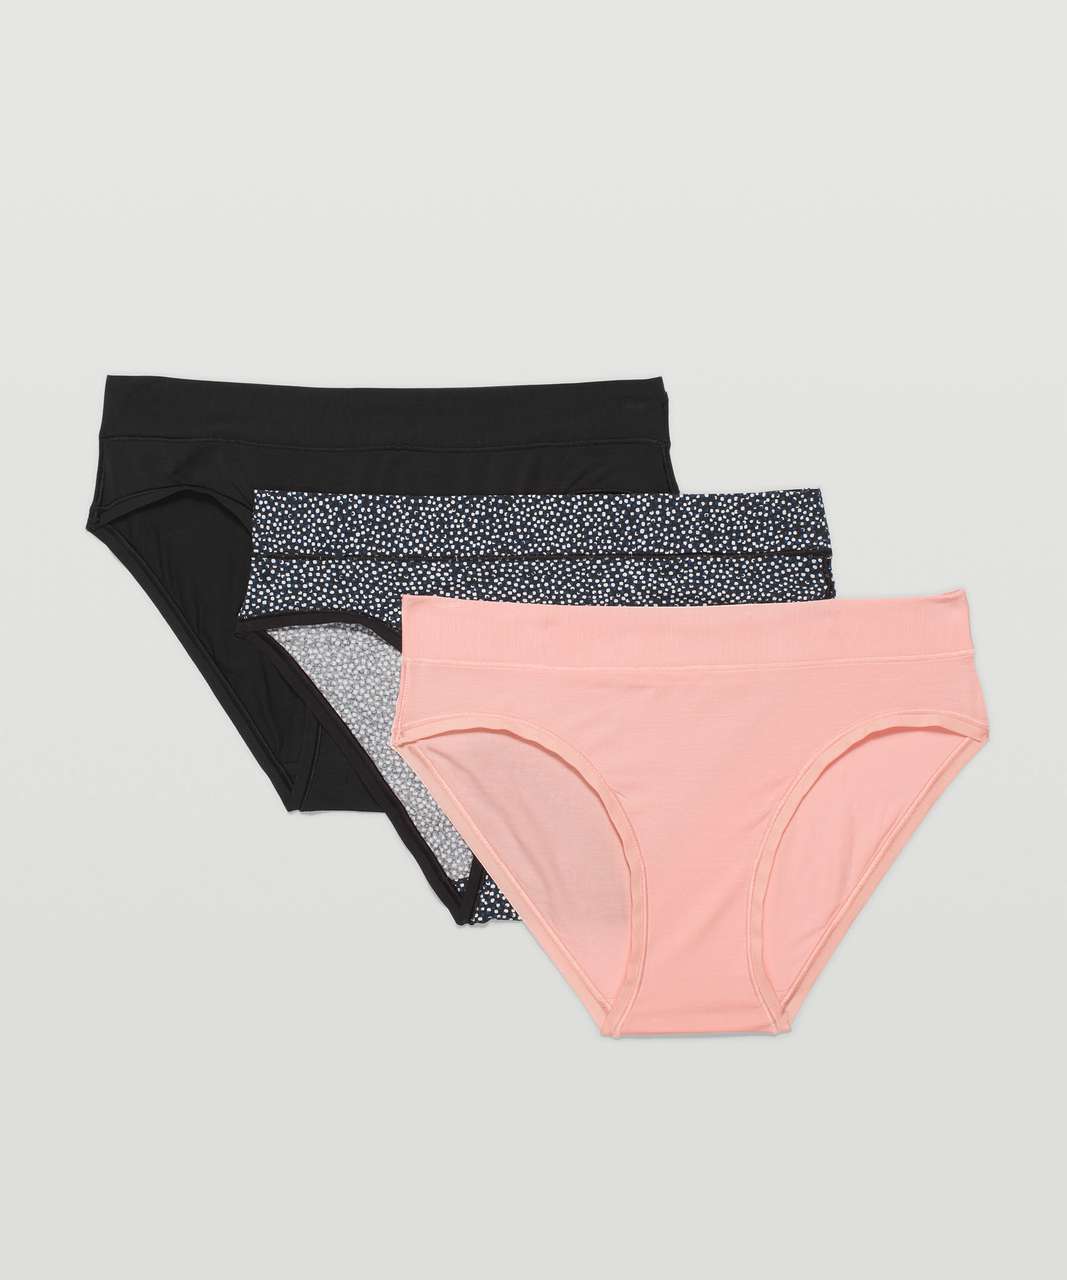 Lululemon UnderEase Mid Rise Bikini Underwear 3 Pack - Black / Pink Mist / Double Dimension Starlight Black